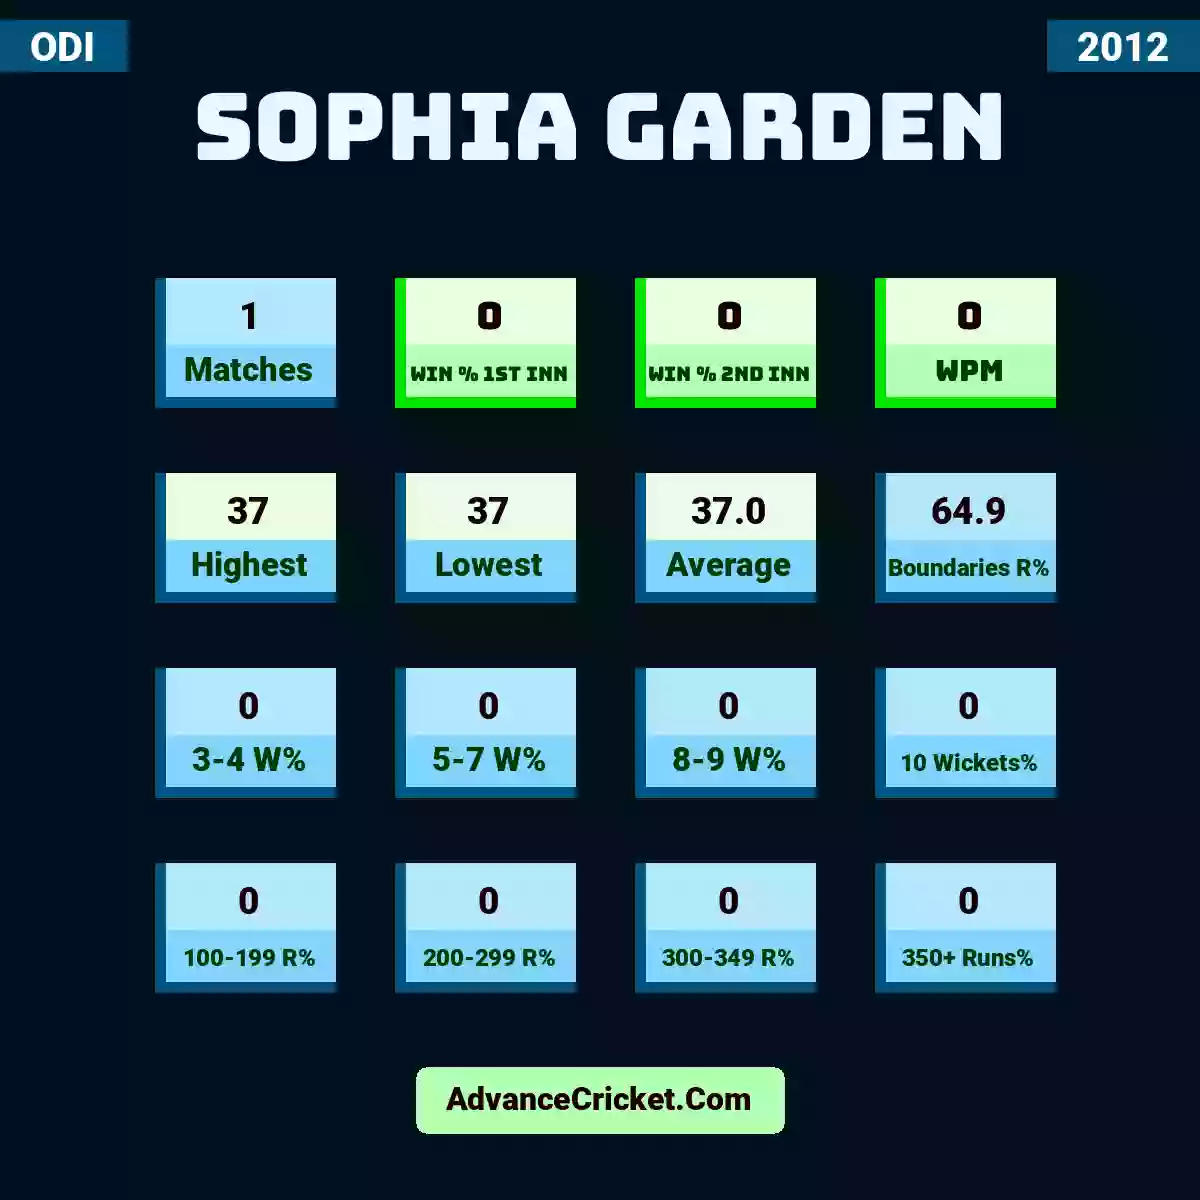 Image showing Sophia Garden with Matches: 1, Win % 1st Inn: 0, Win % 2nd Inn: 0, WPM: 0, Highest: 37, Lowest: 37, Average: 37.0, Boundaries R%: 64.9, 3-4 W%: 0, 5-7 W%: 0, 8-9 W%: 0, 10 Wickets%: 0, 100-199 R%: 0, 200-299 R%: 0, 300-349 R%: 0, 350+ Runs%: 0.